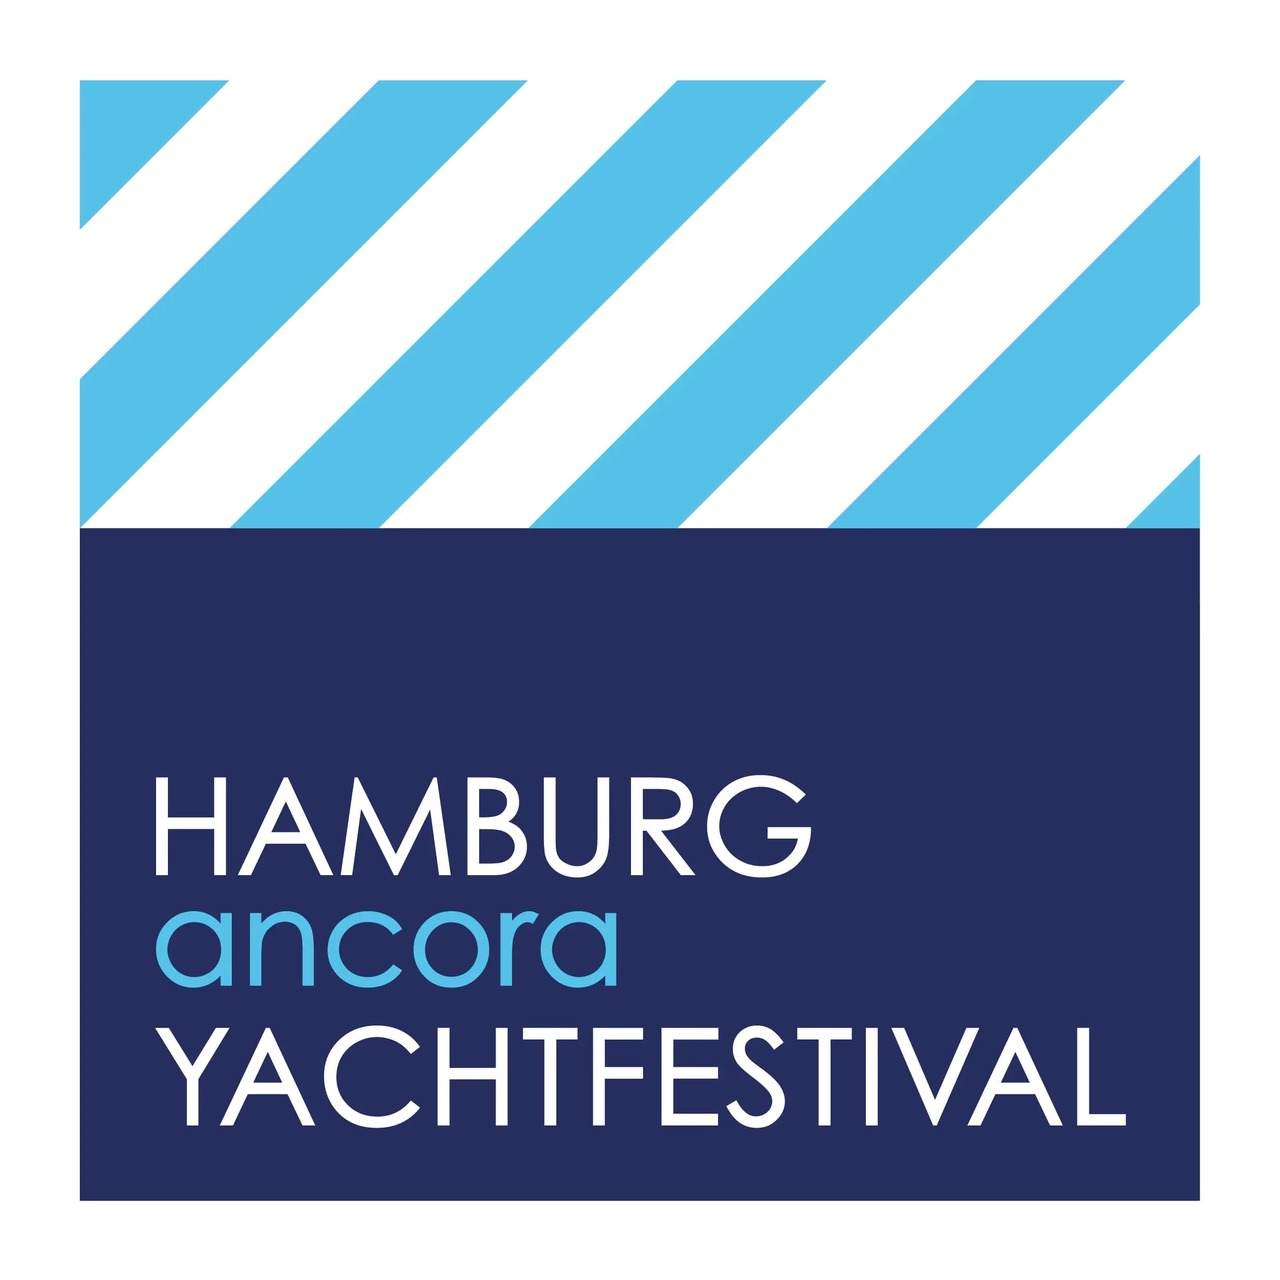 HAMBURG Ancora YACHTFESTIVAL | Allemagne